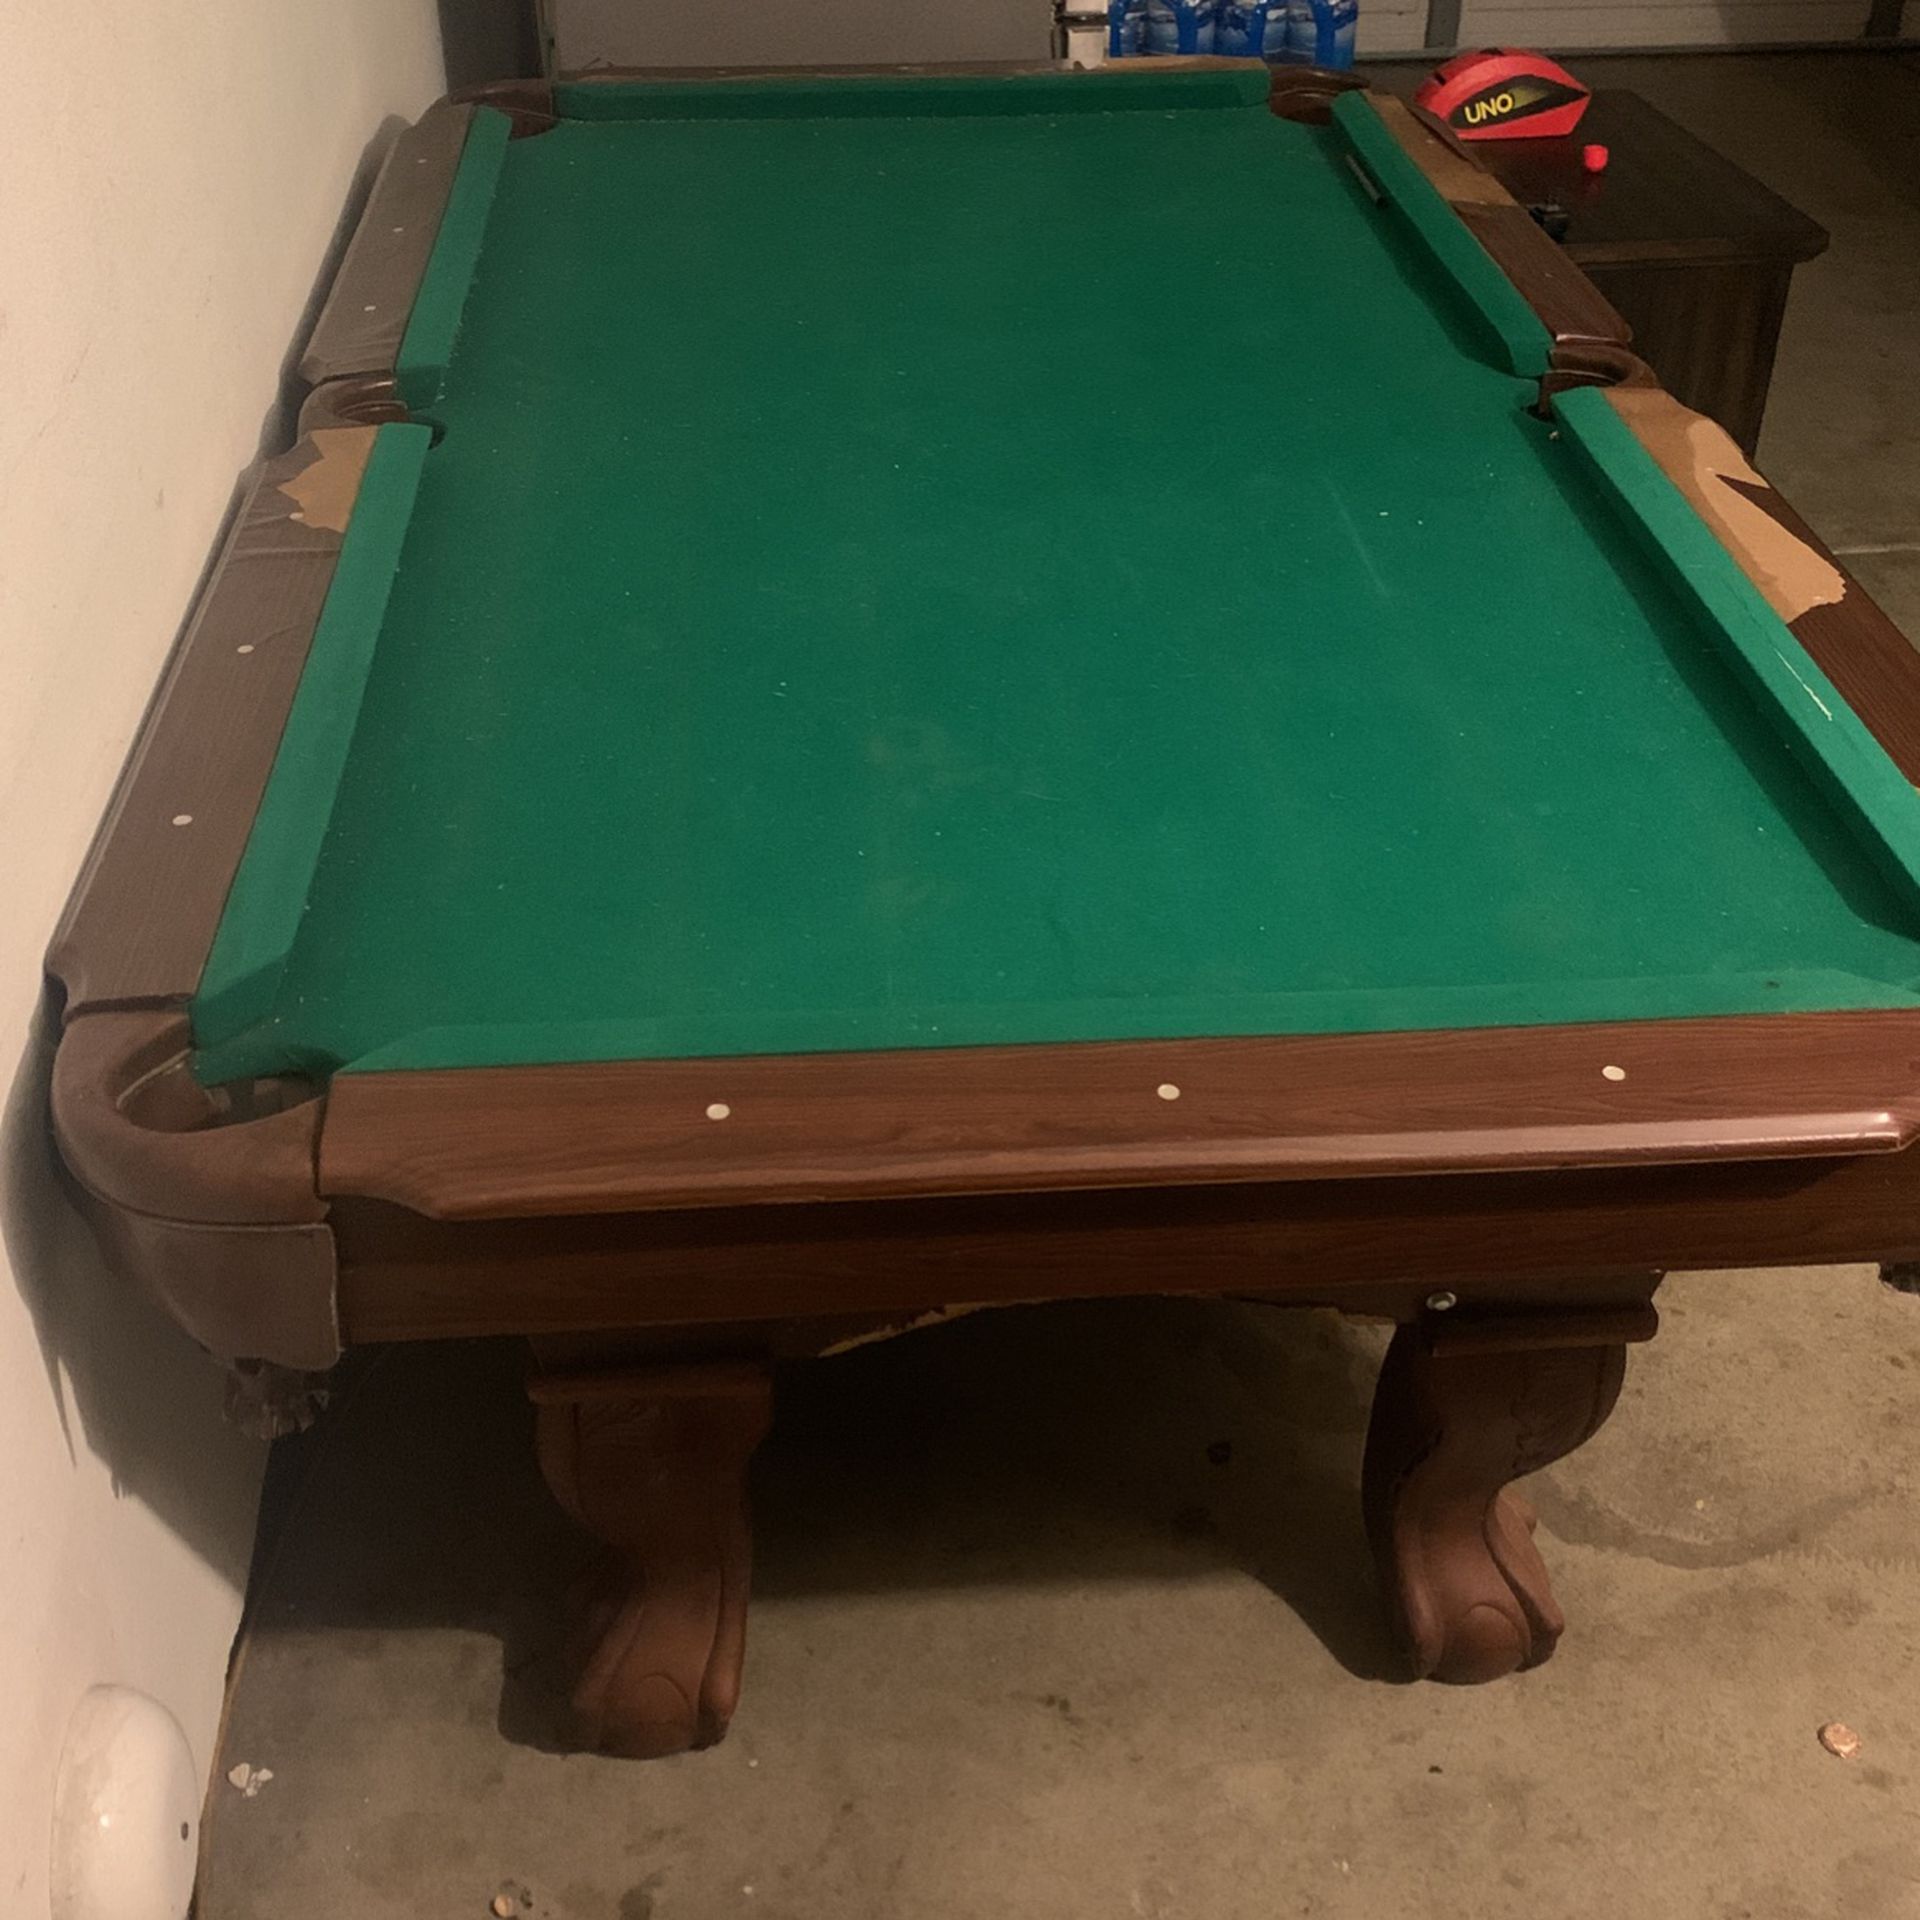 Free Pool Table